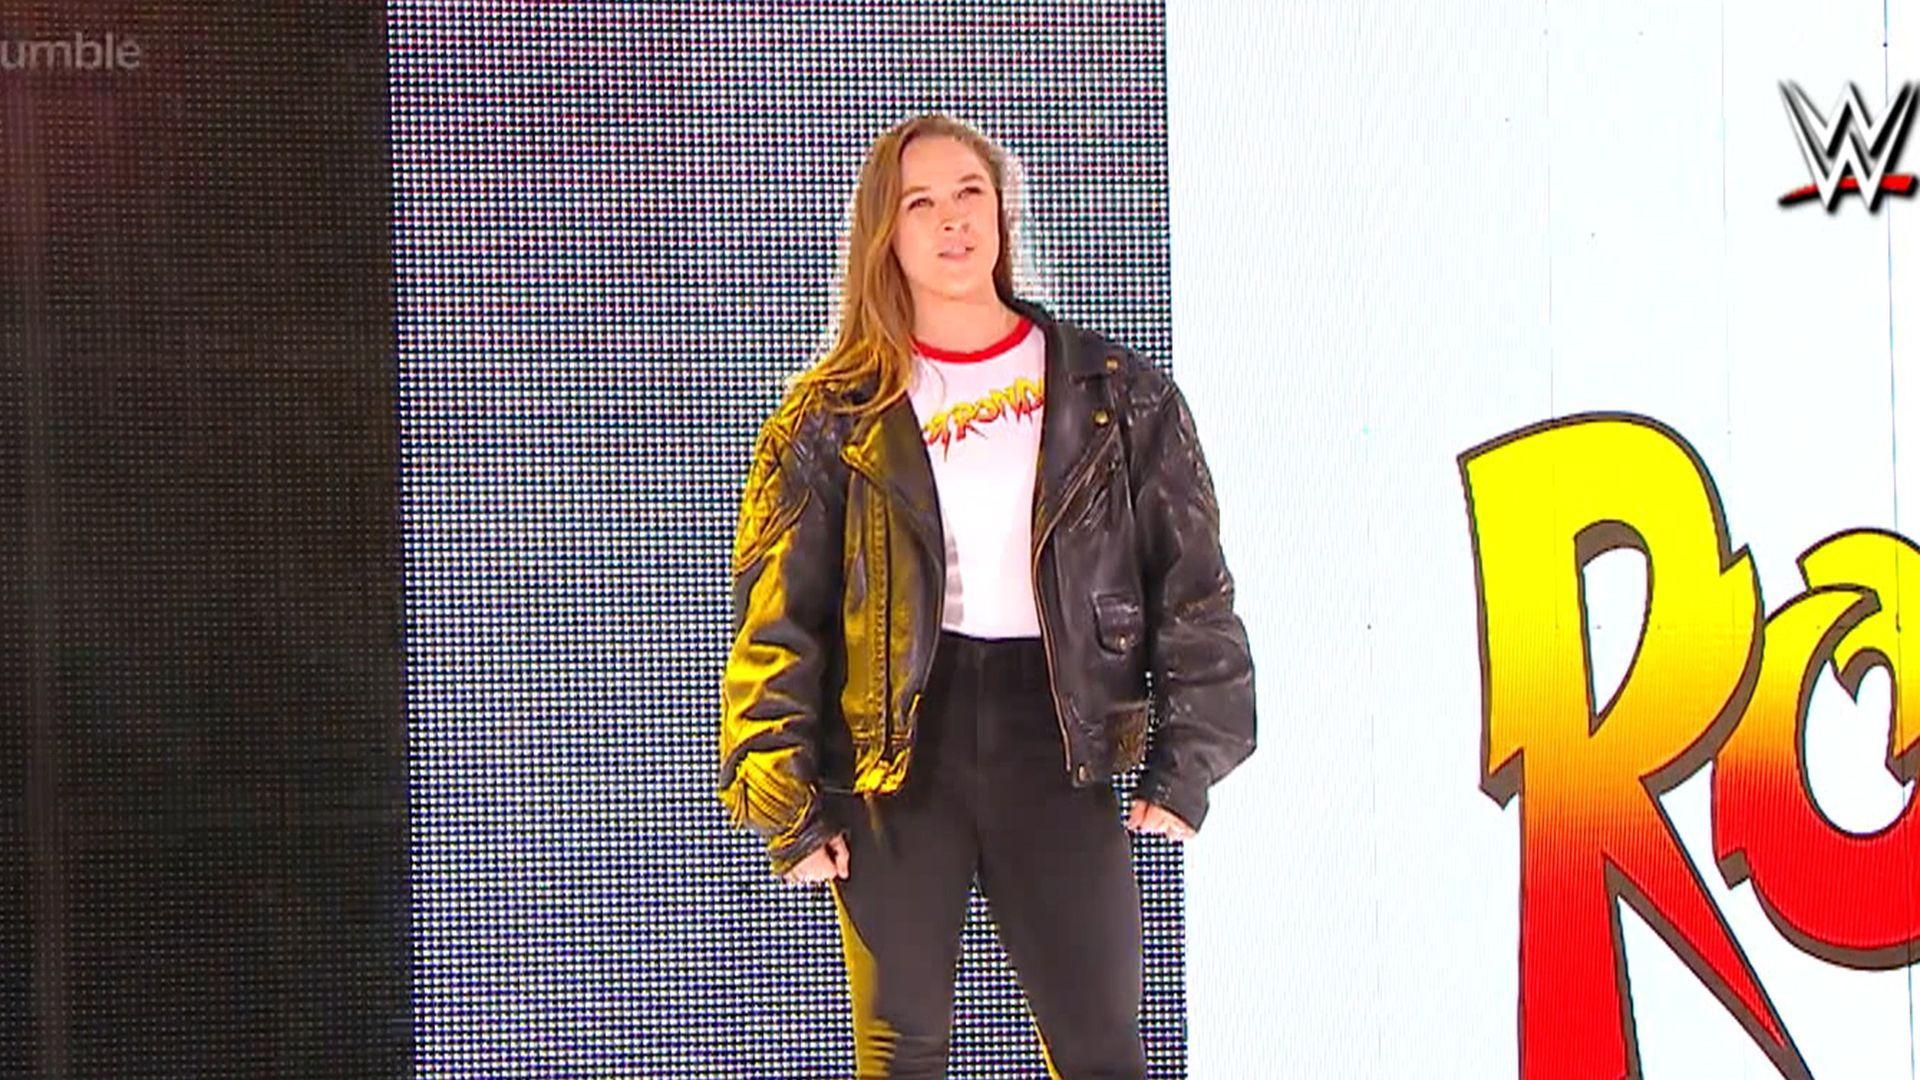 Ronda Rousey arrives at WWE Royal Rumble